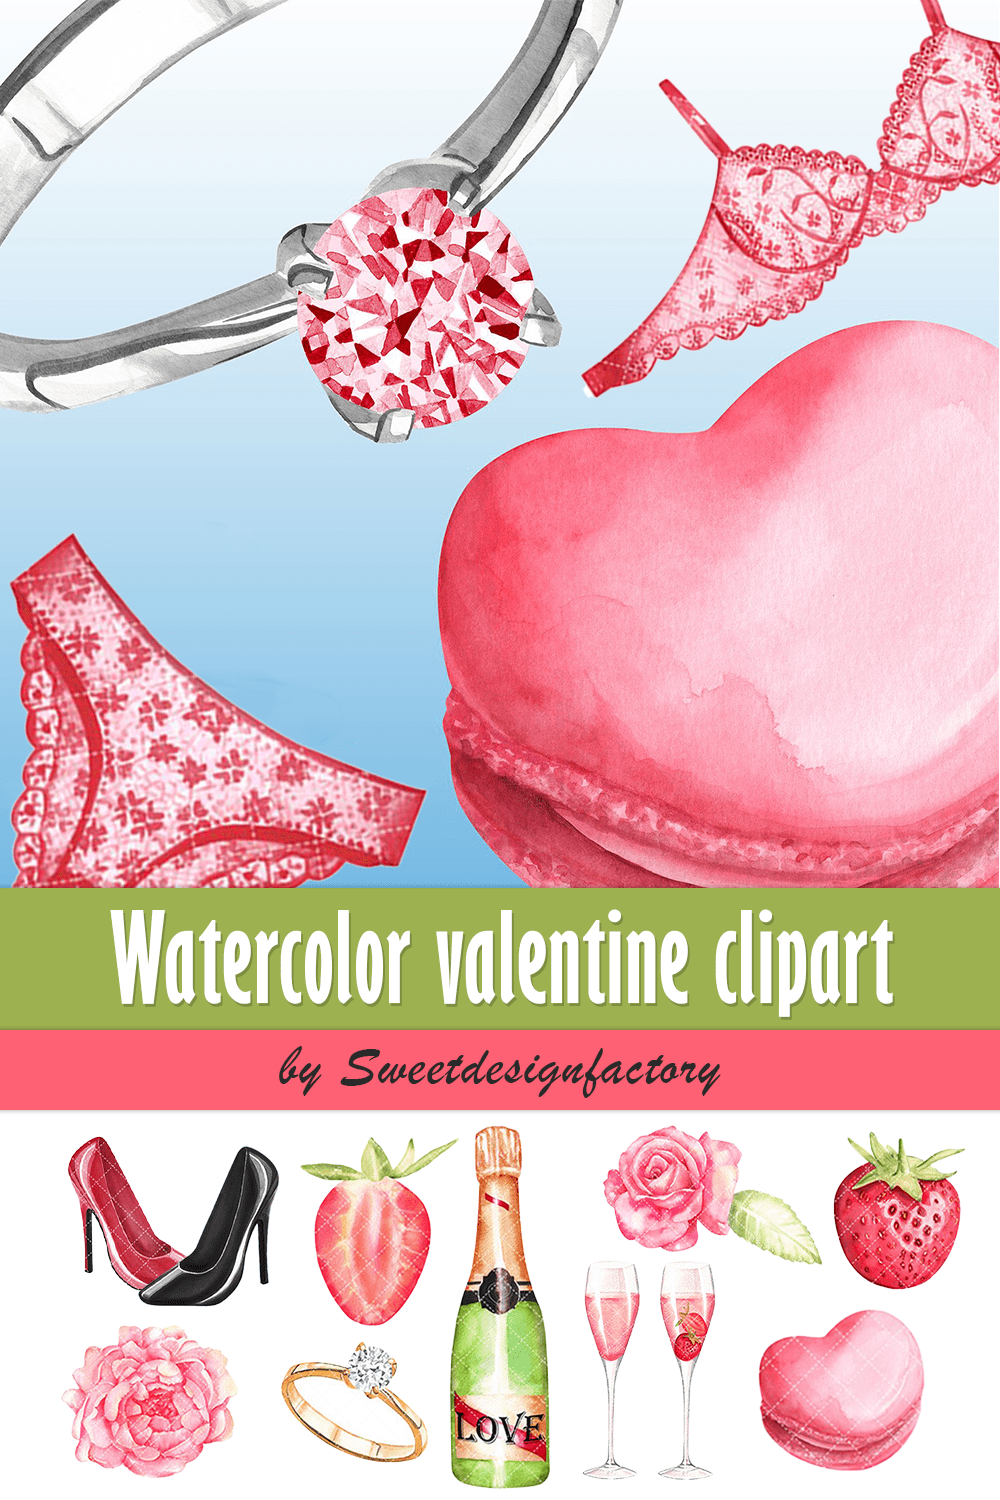 watercolor valentine clipart pinterest 64